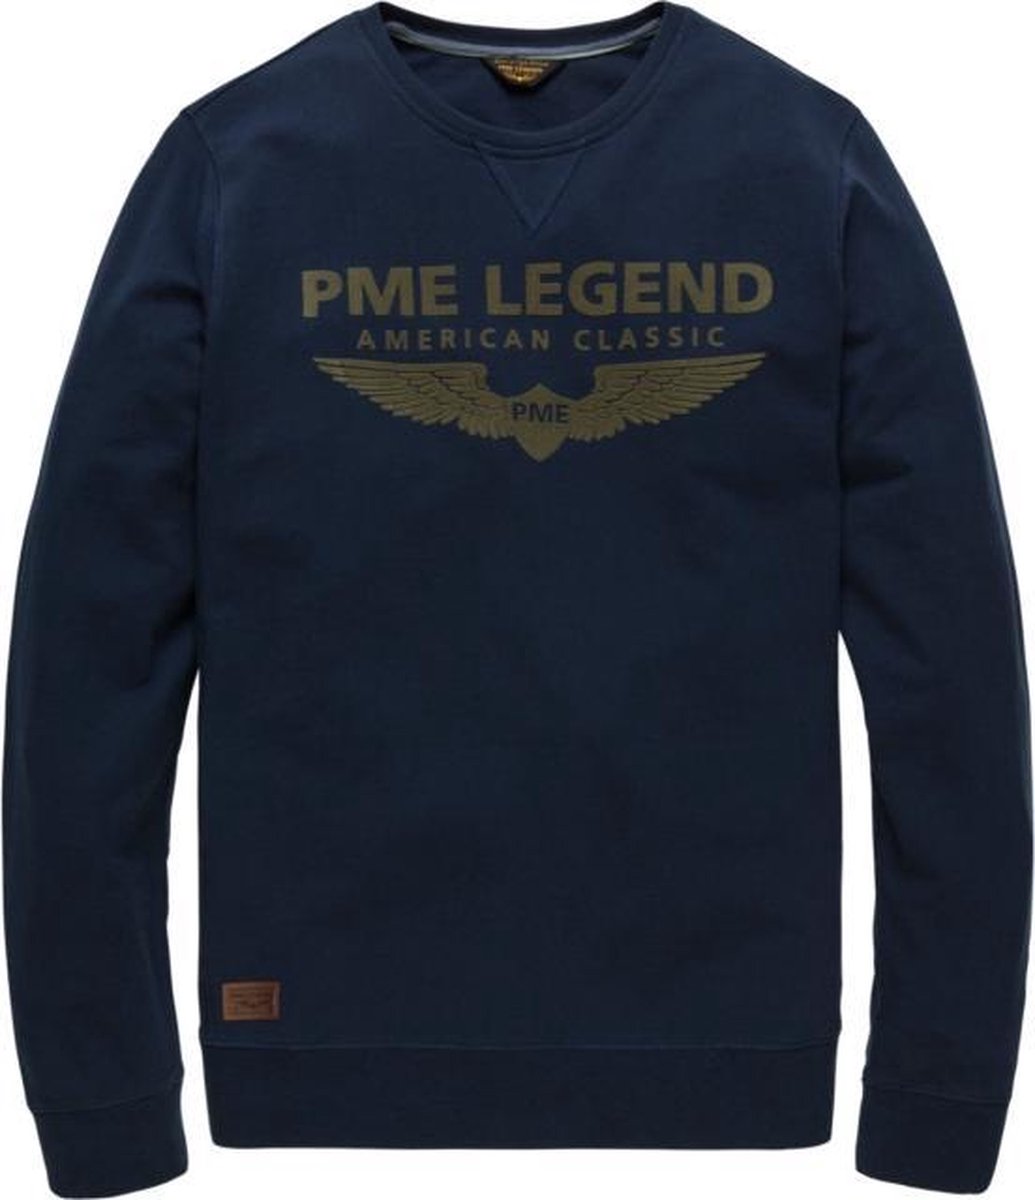 Pme legend dunnere blauwe sweater Maat - XL | bol.com